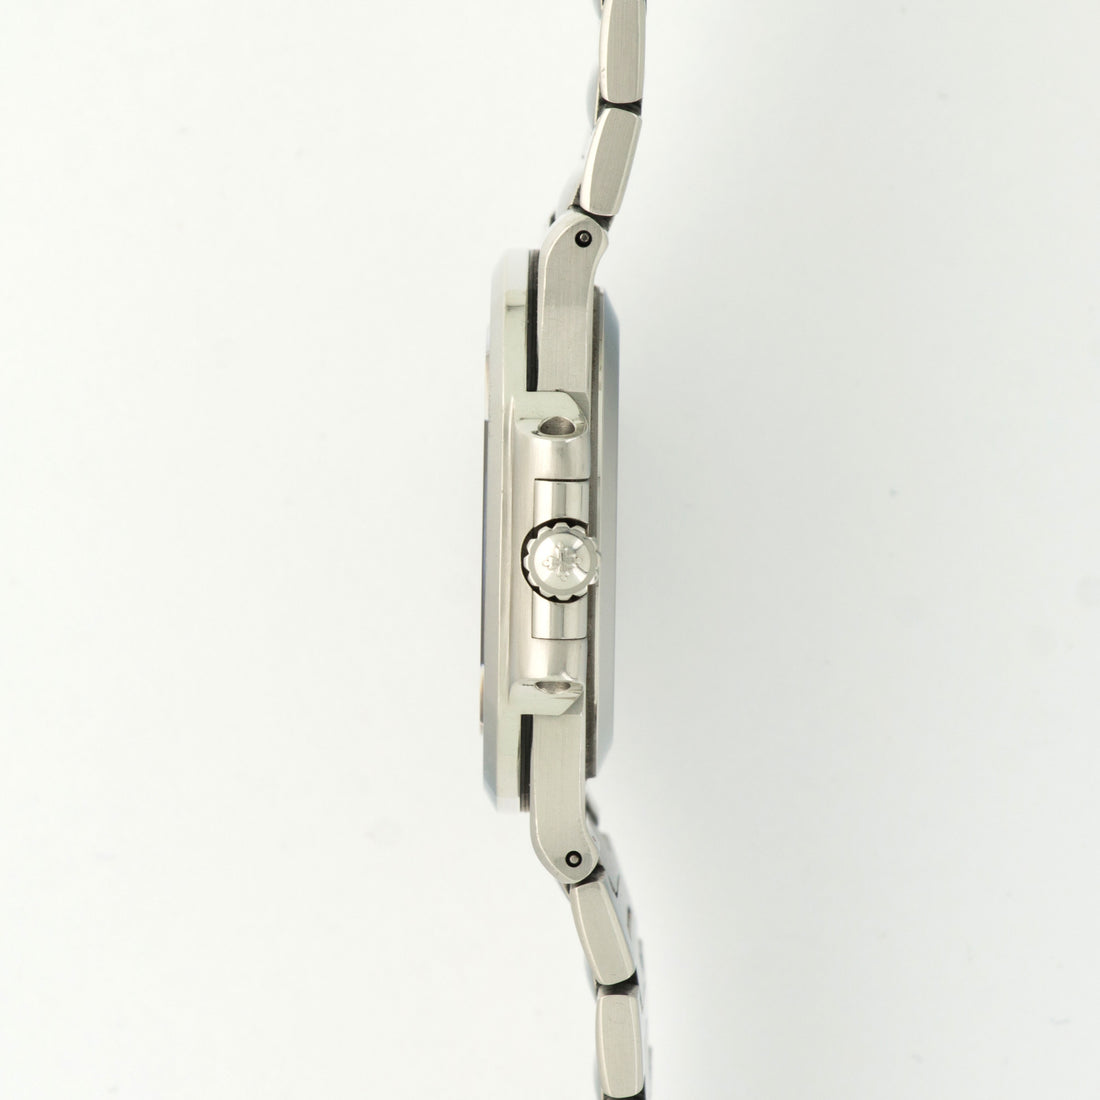 Patek Philippe Steel Nautilus Watch Ref. 3800/1A with Original Paper